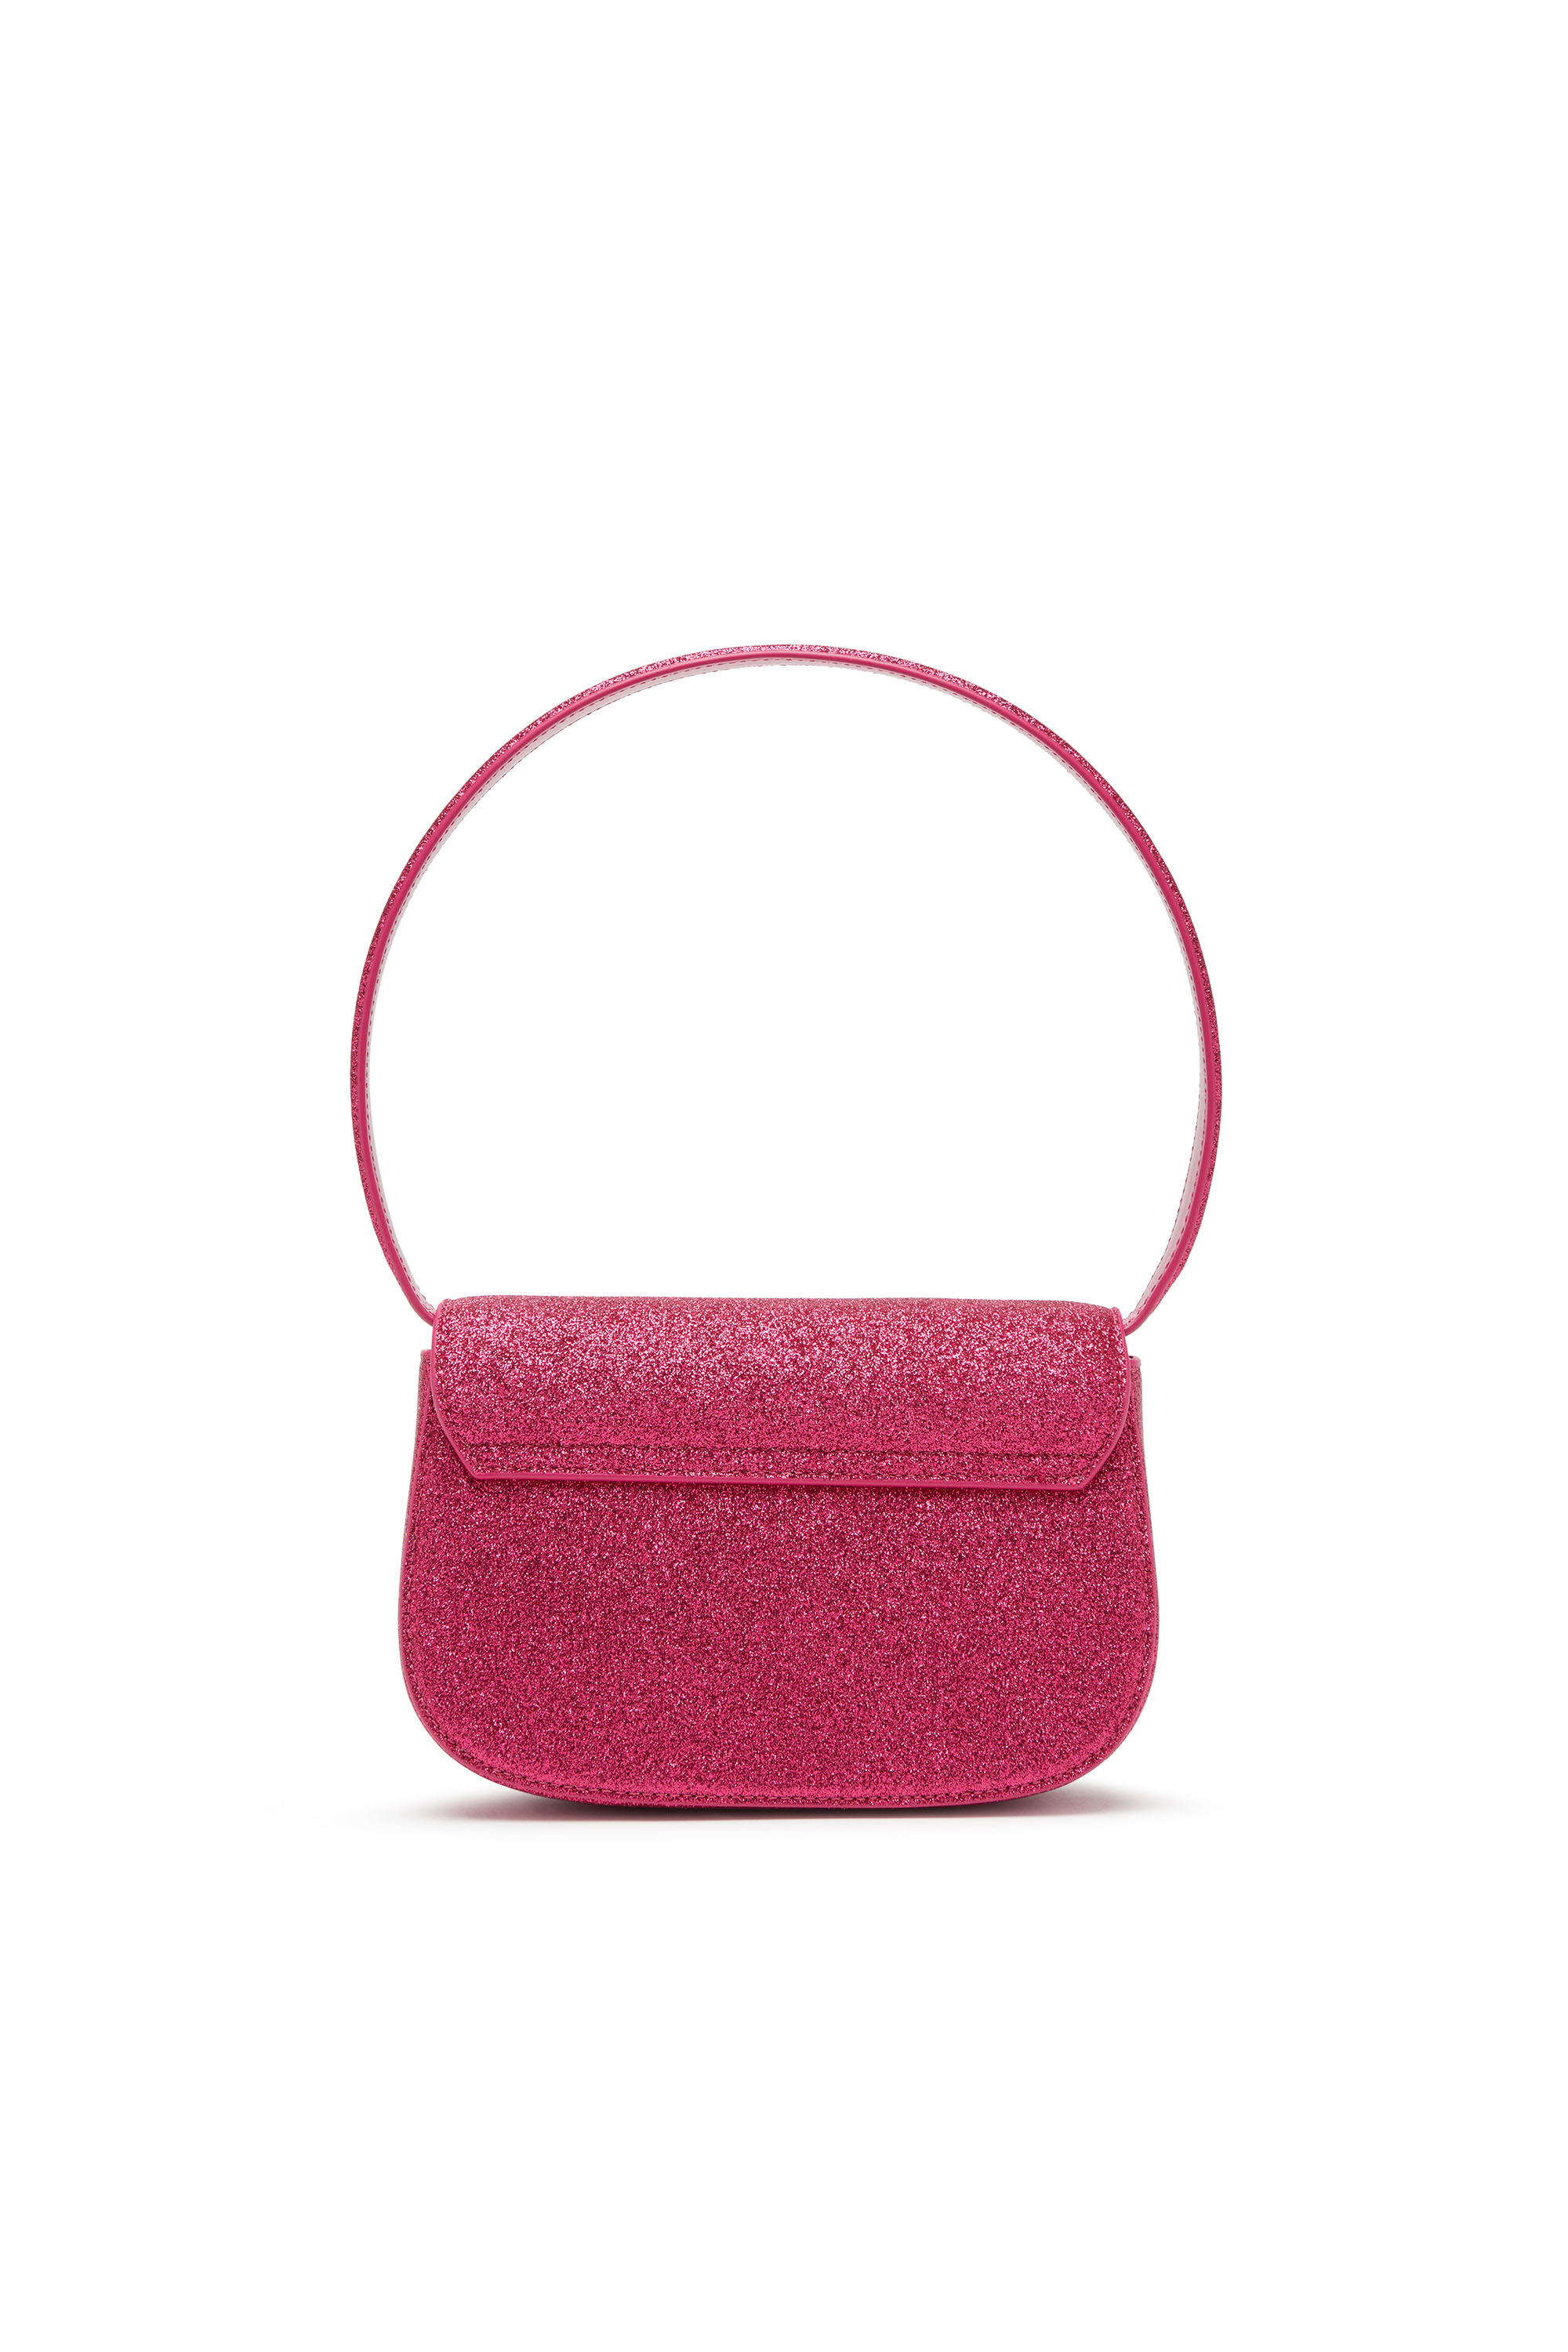 Diesel - 1DR, Female 1DR-Iconic shoulder bag in glitter fabric in Pink - Image 3